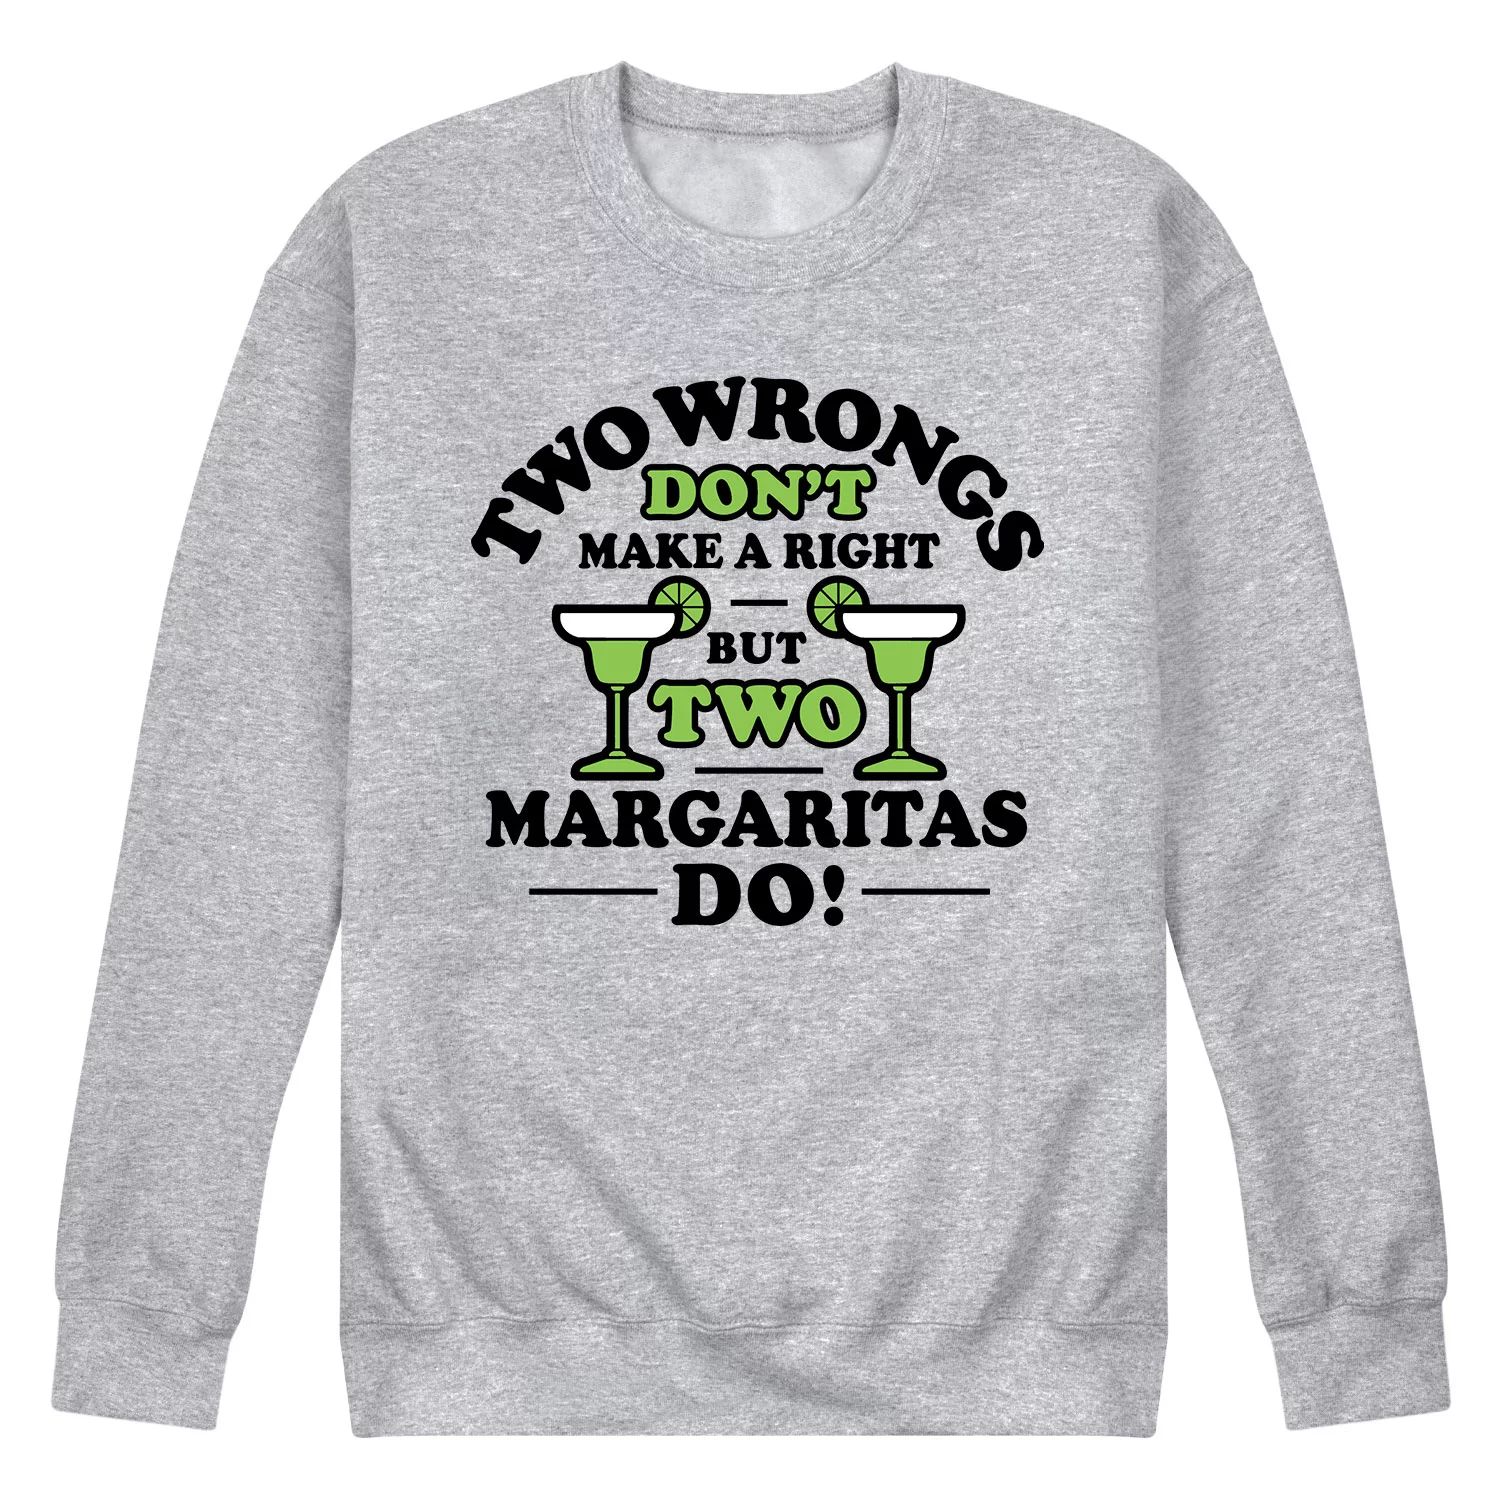 Мужской свитшот Two Wrongs Right Margaritas Licensed Character